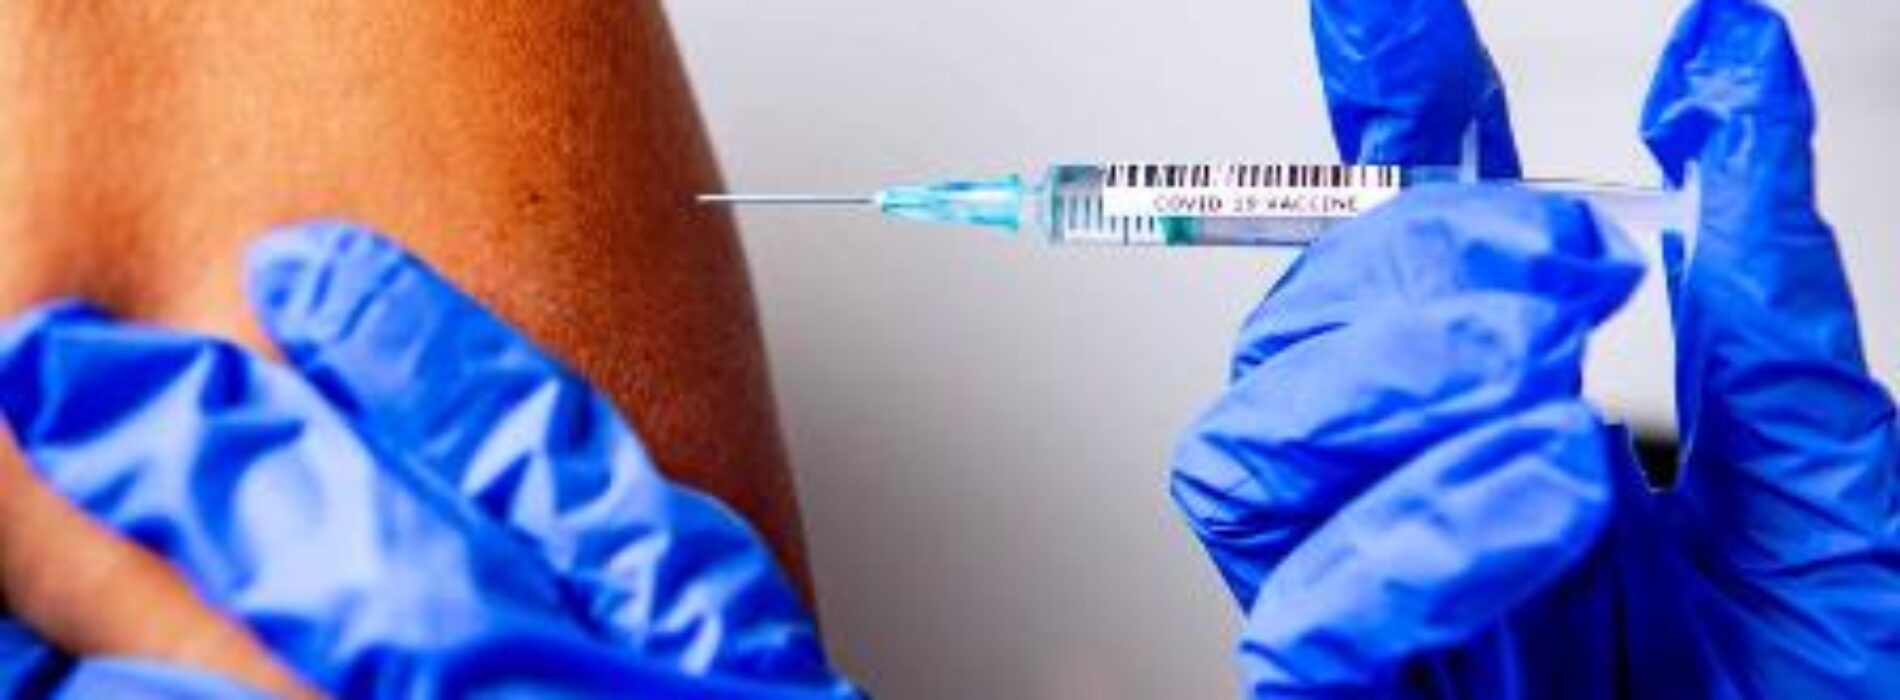 FG creates self e-registration link for COVID-19 vaccination